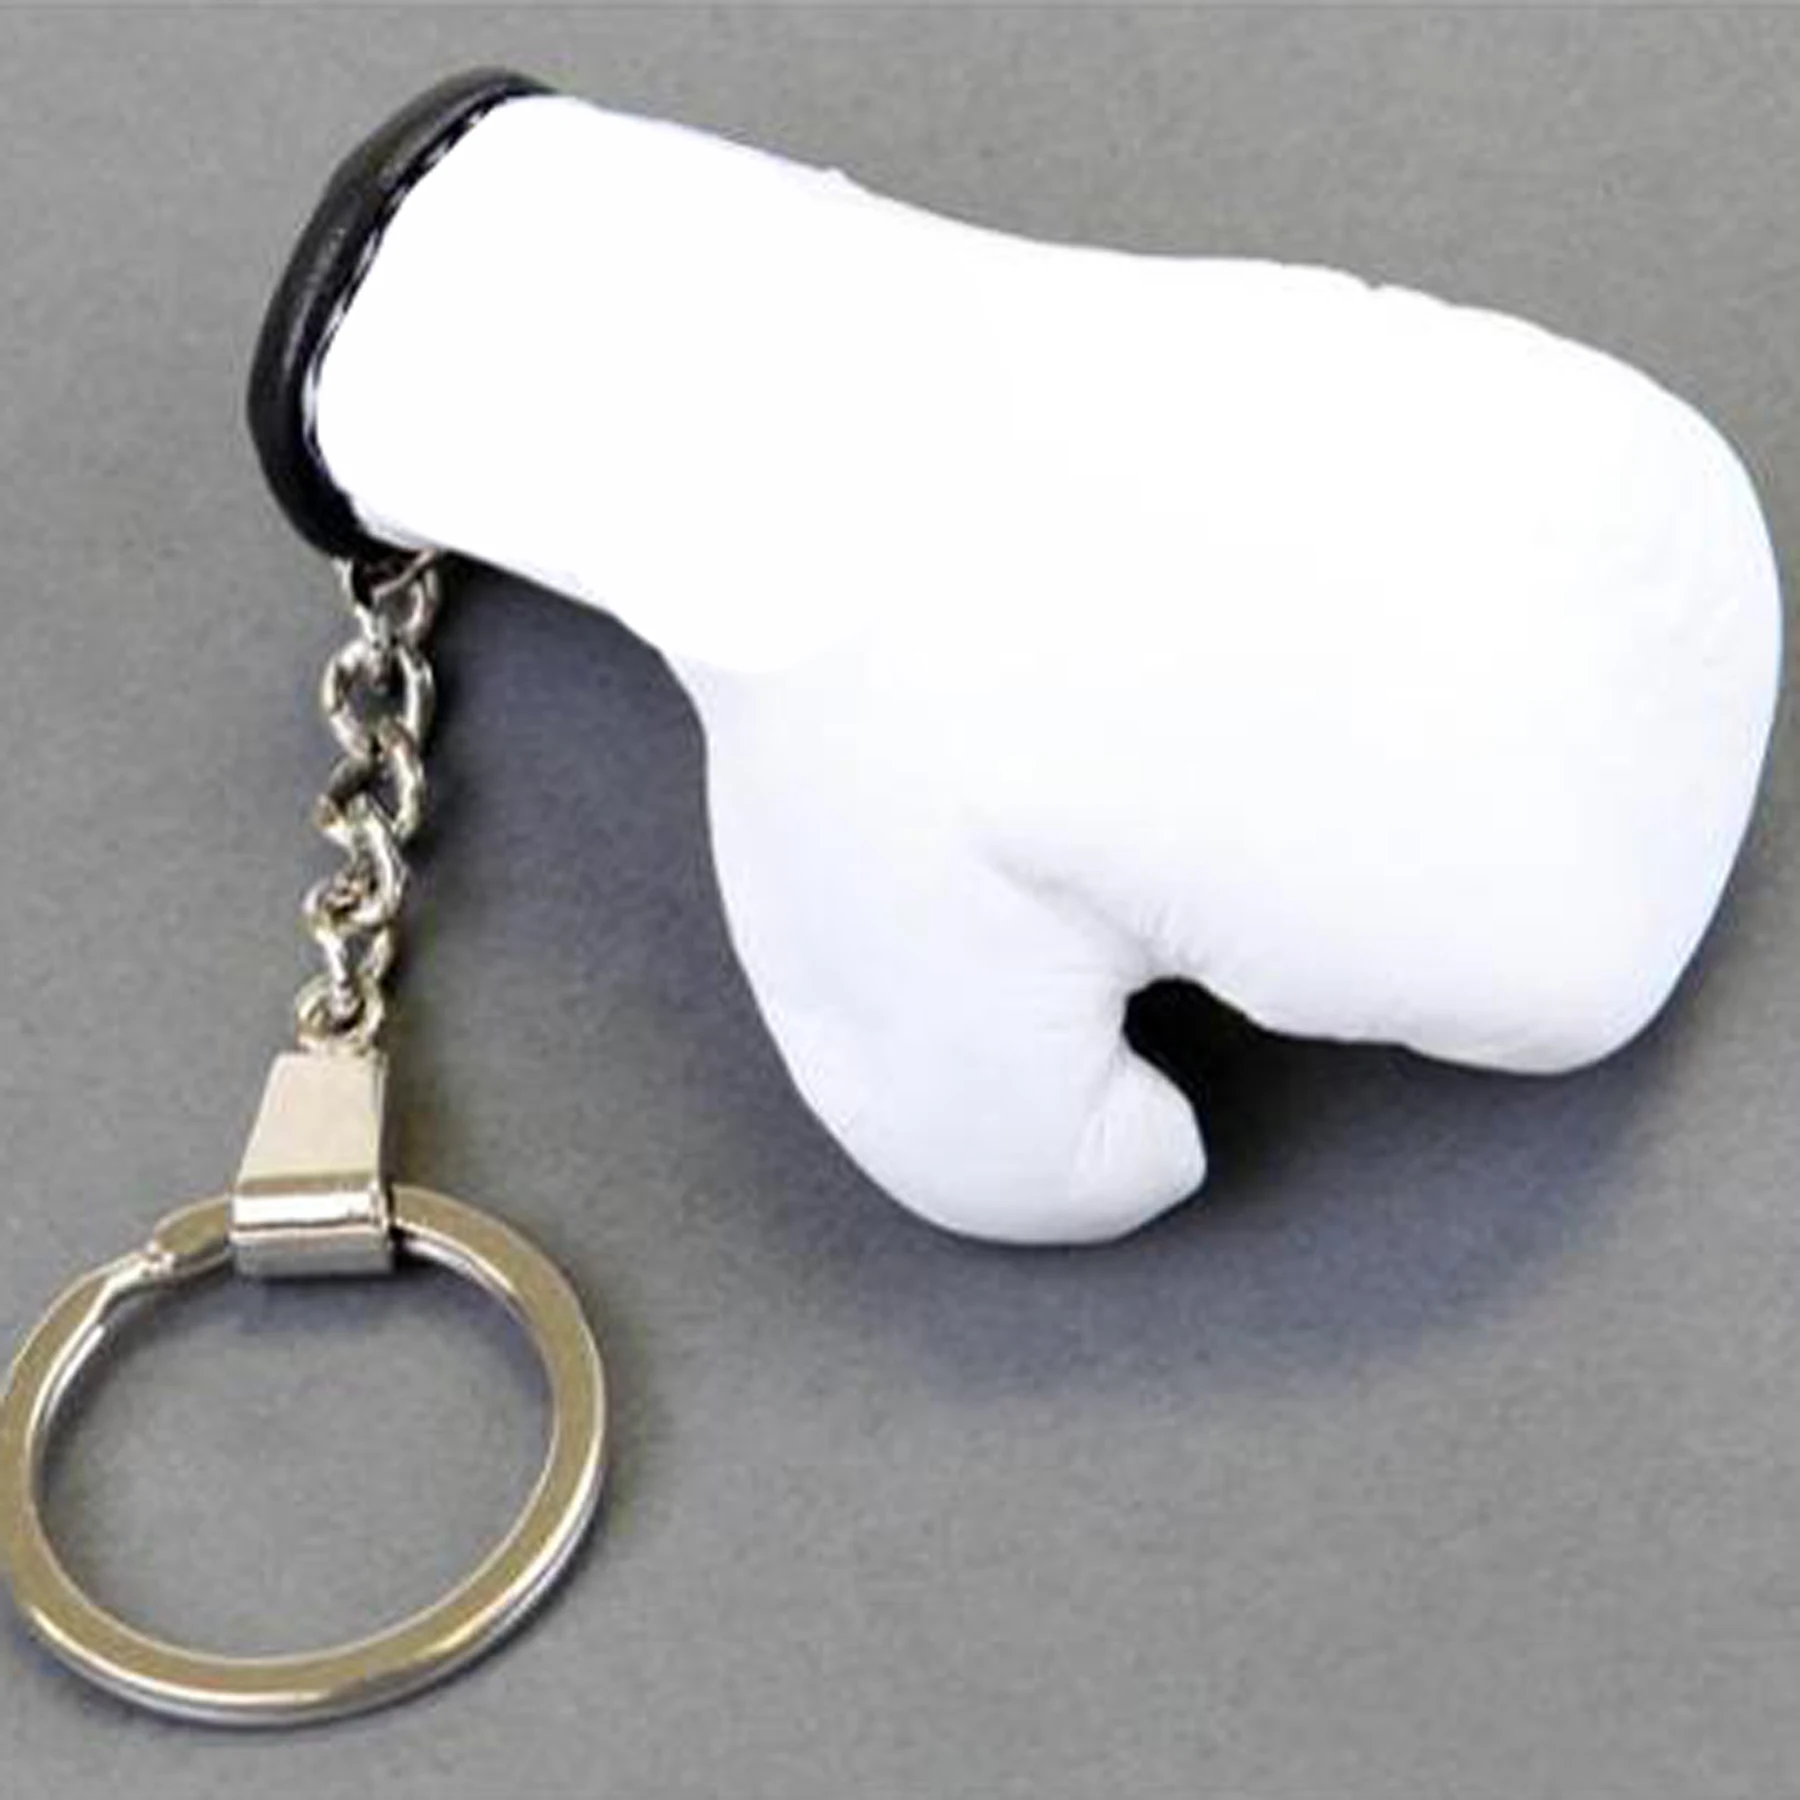 Keychain Mini boxing gloves key chain ring flag key ring cute SRI LANKA 